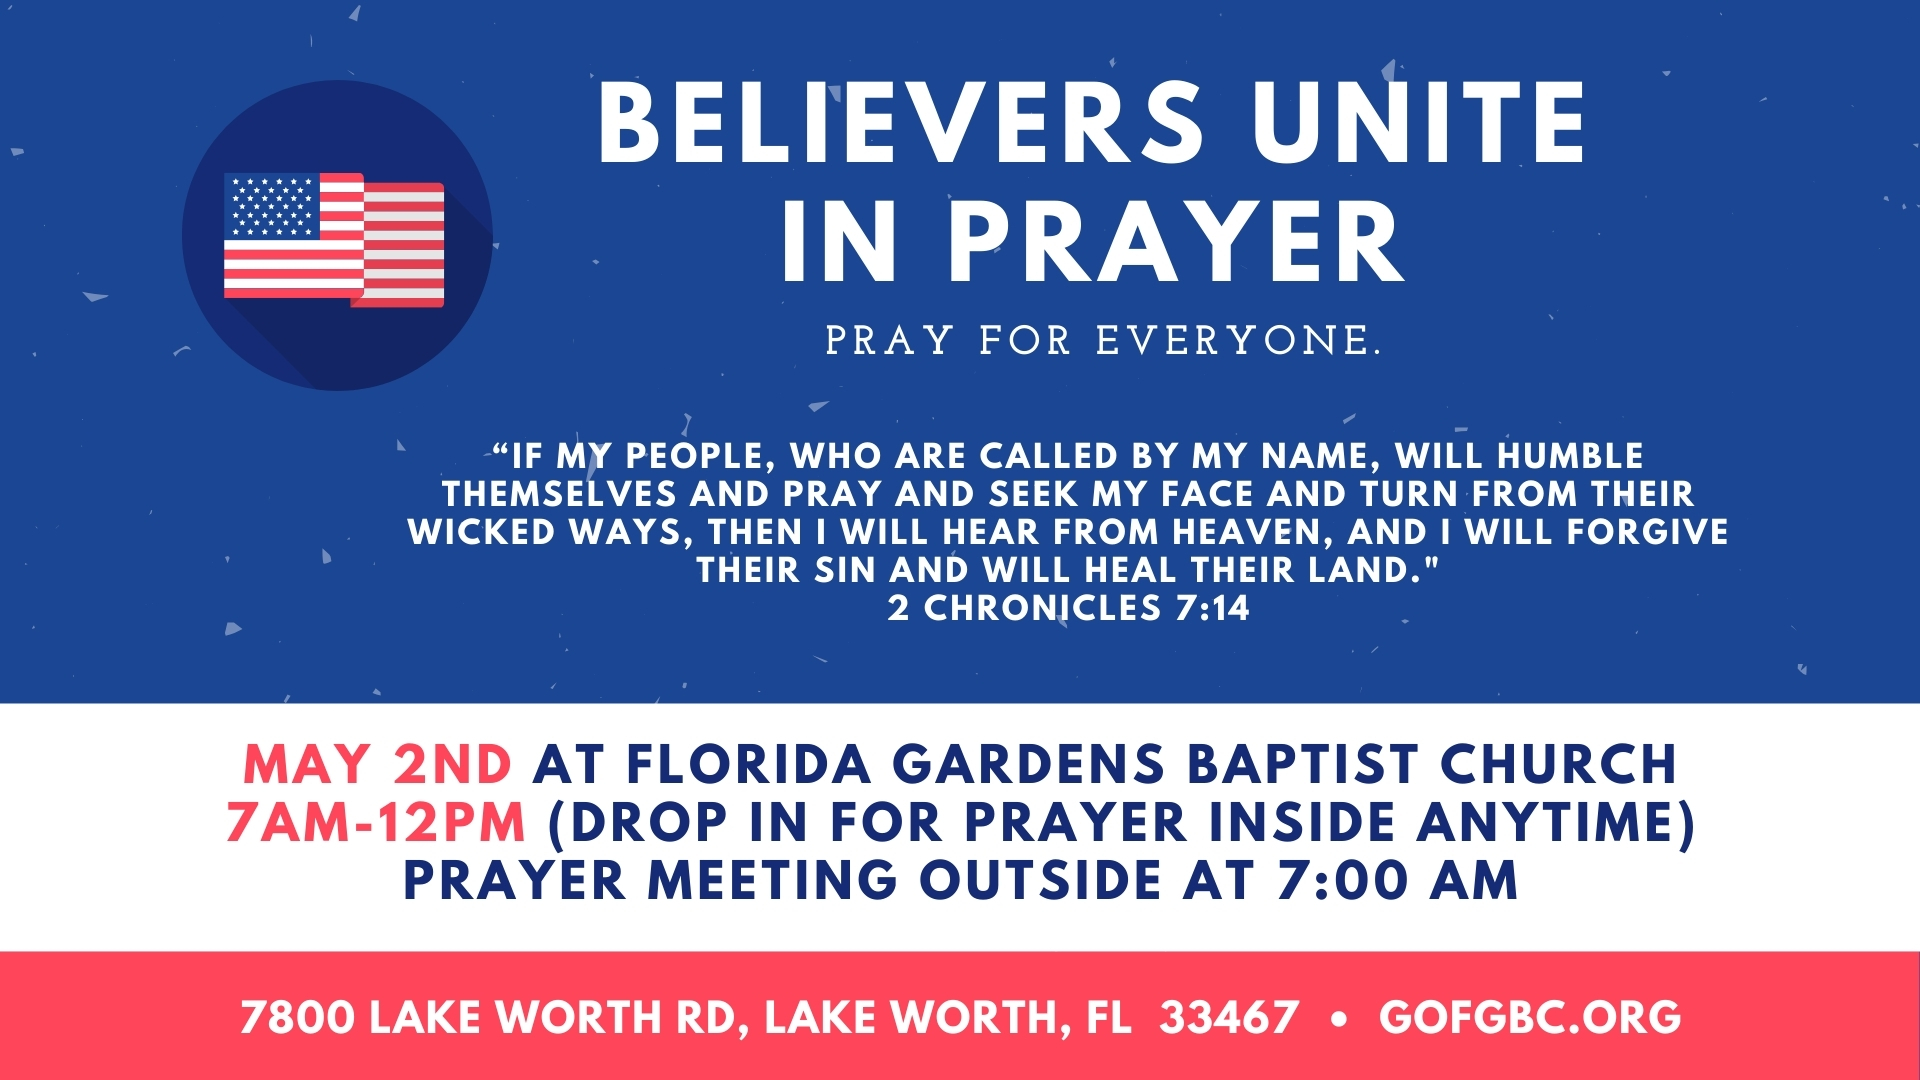 Believers Unite in Prayer FGBC image